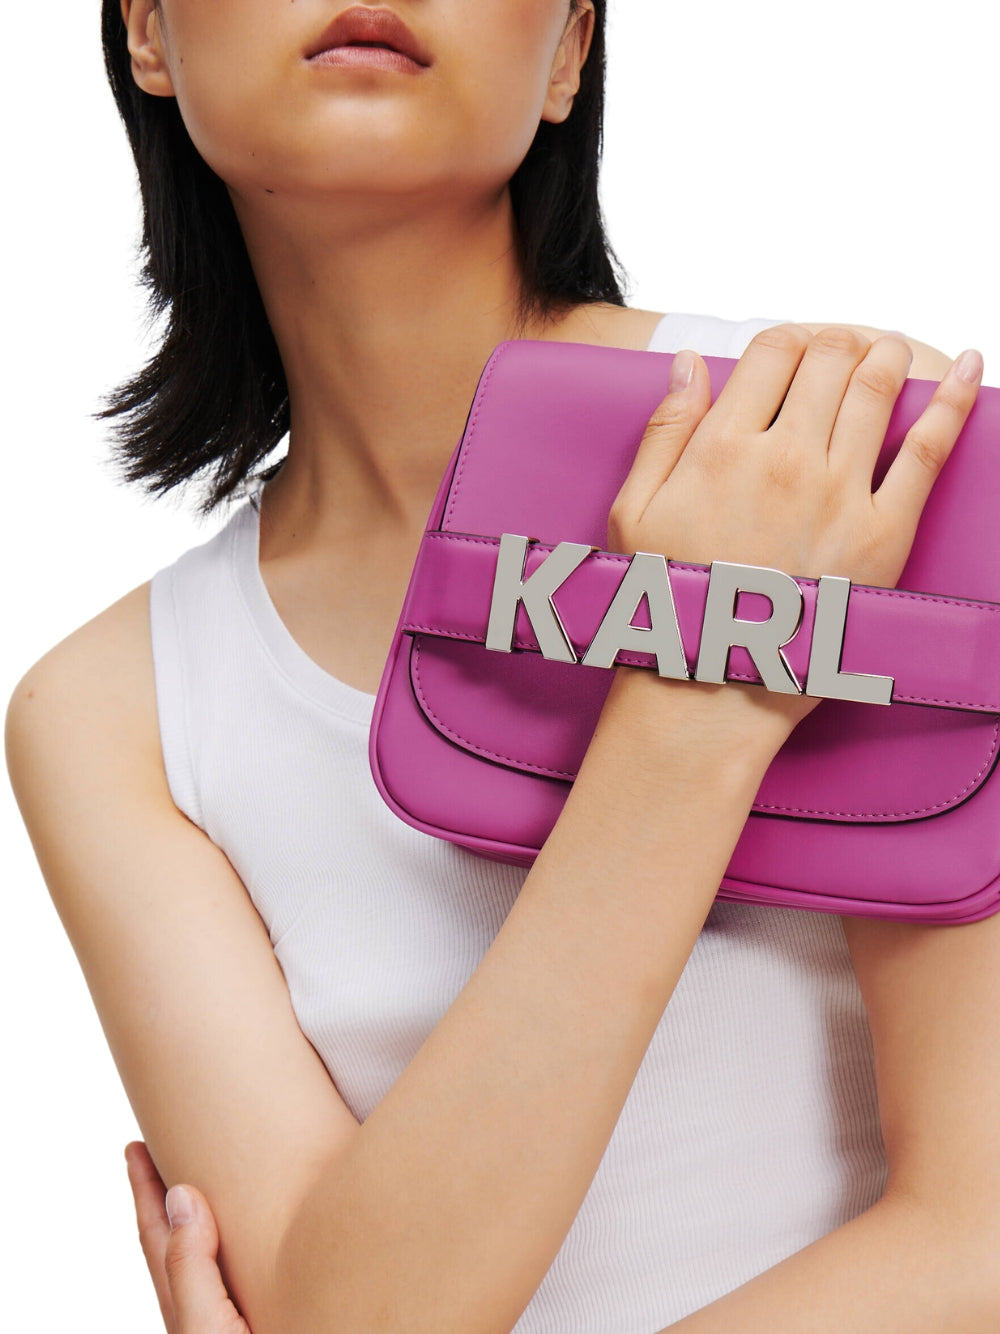 Karl Lagerfeld bag